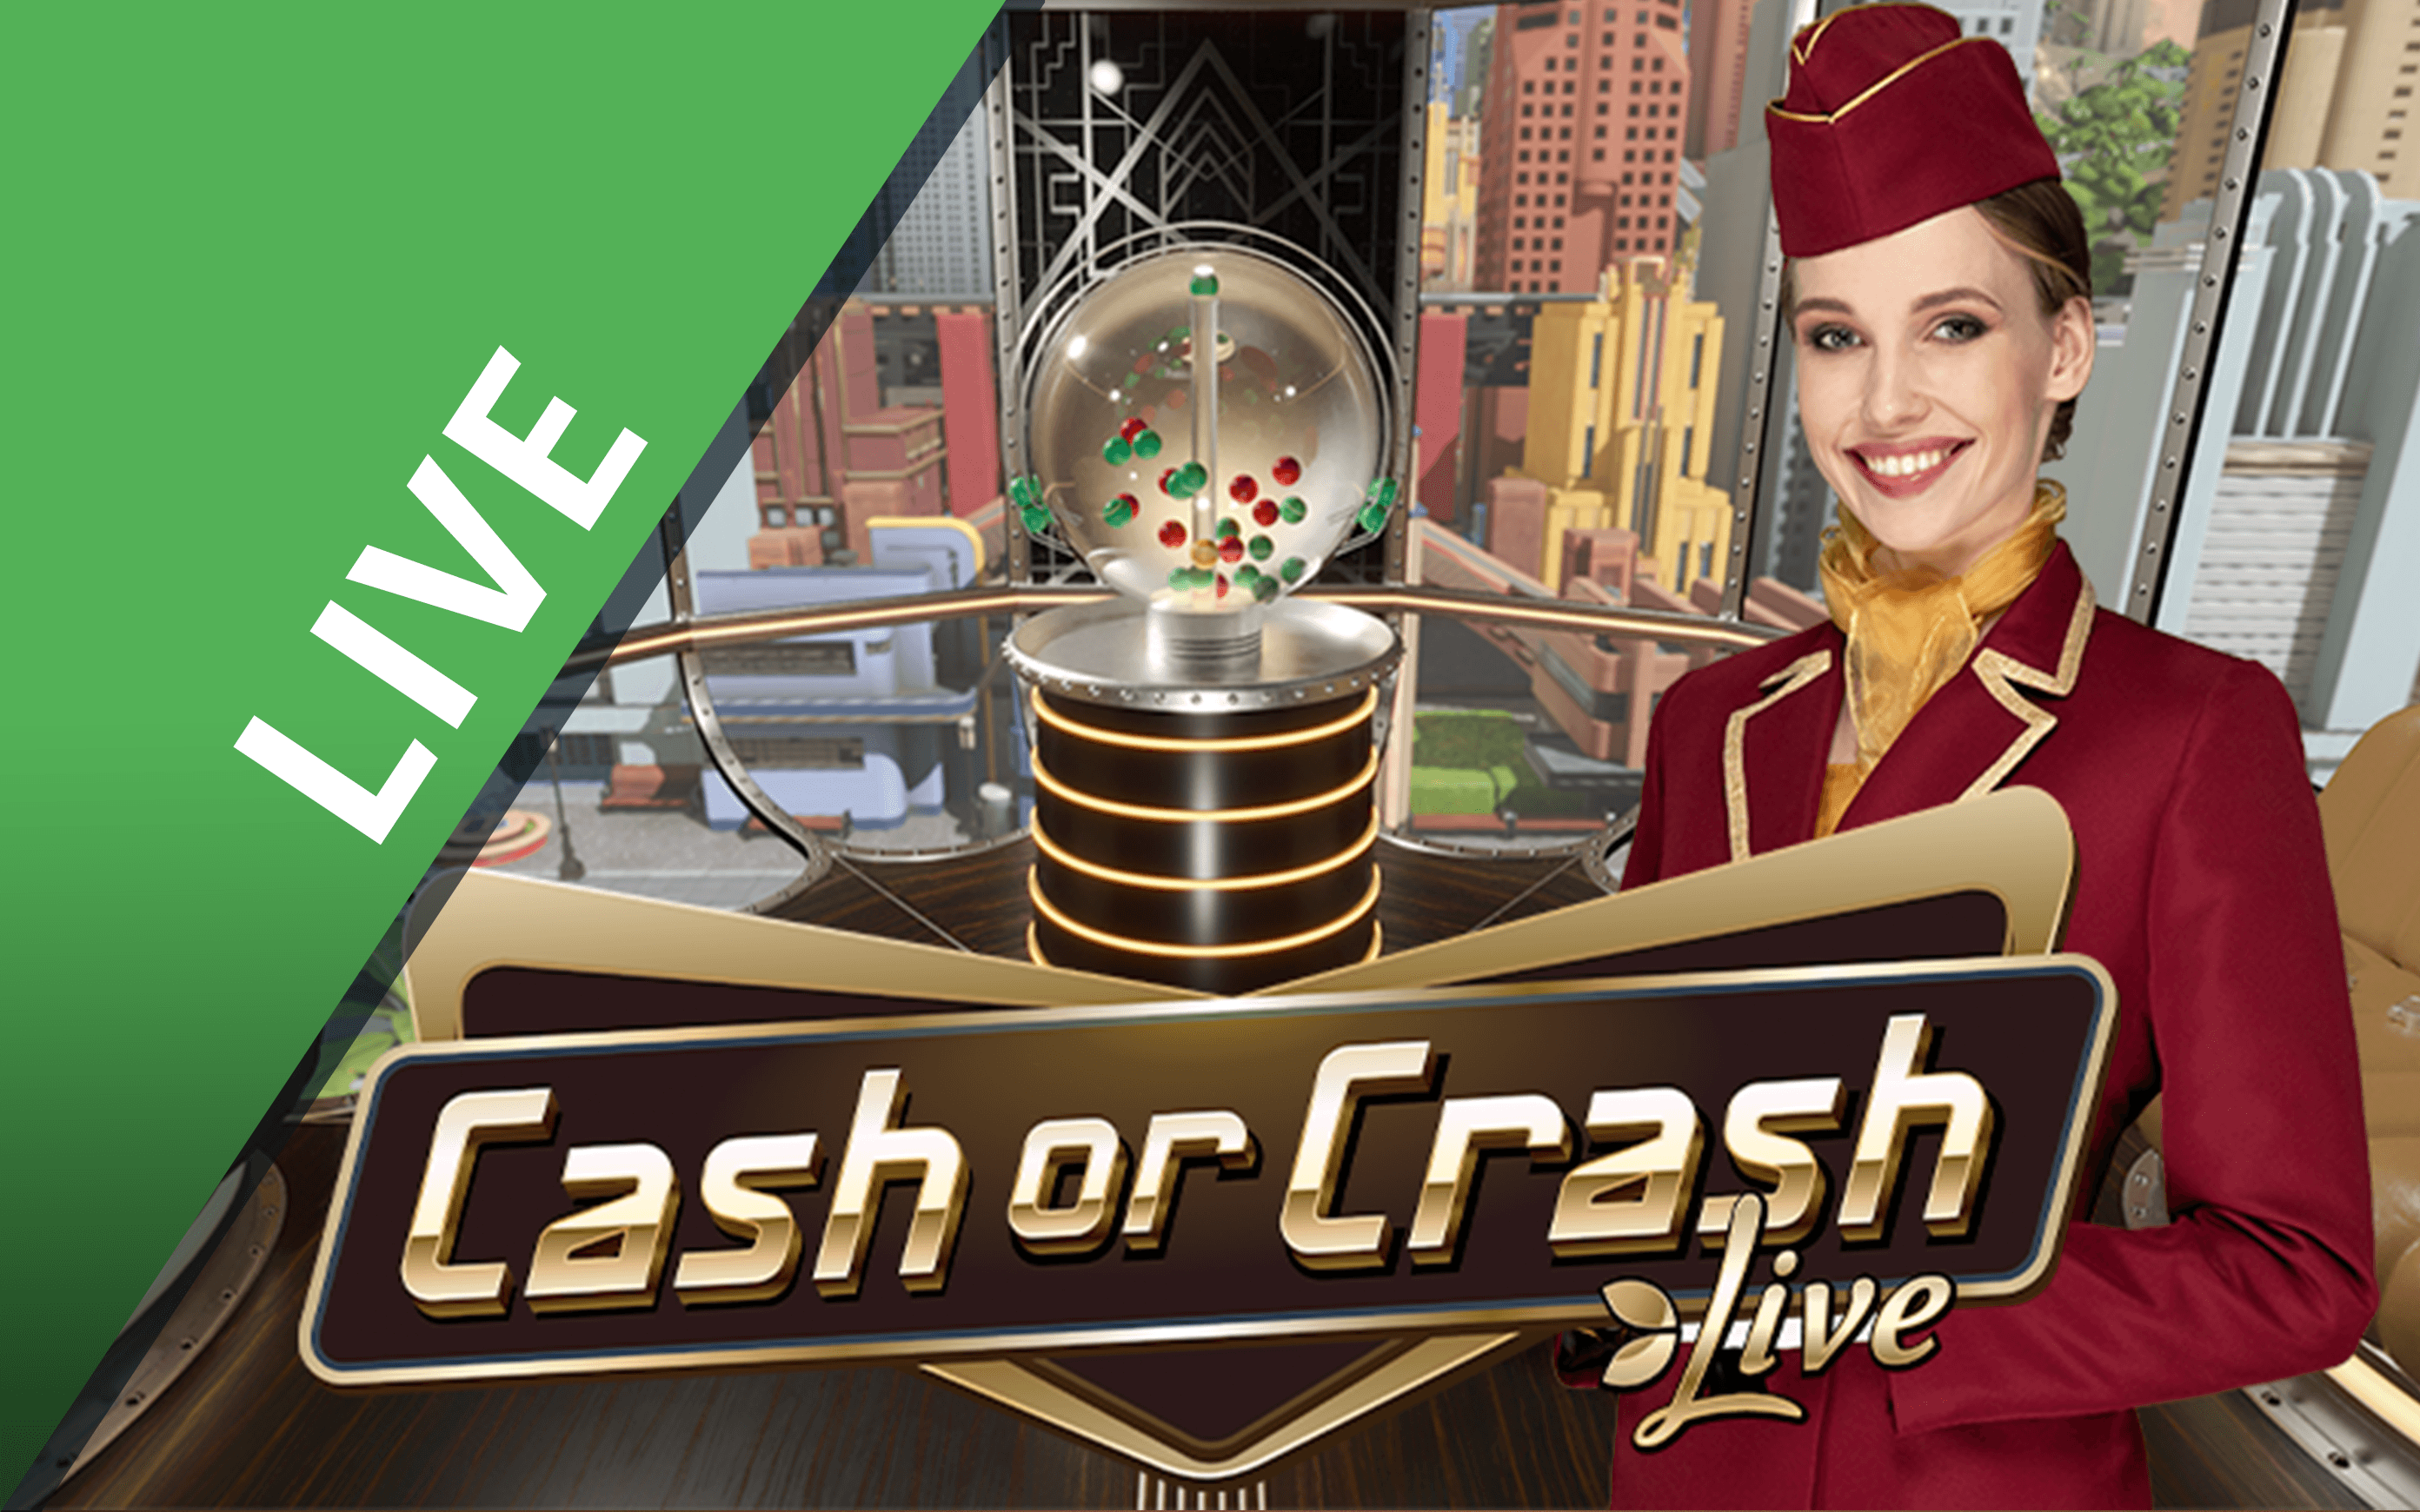 Play Cash or Crash on Starcasino.be online casino